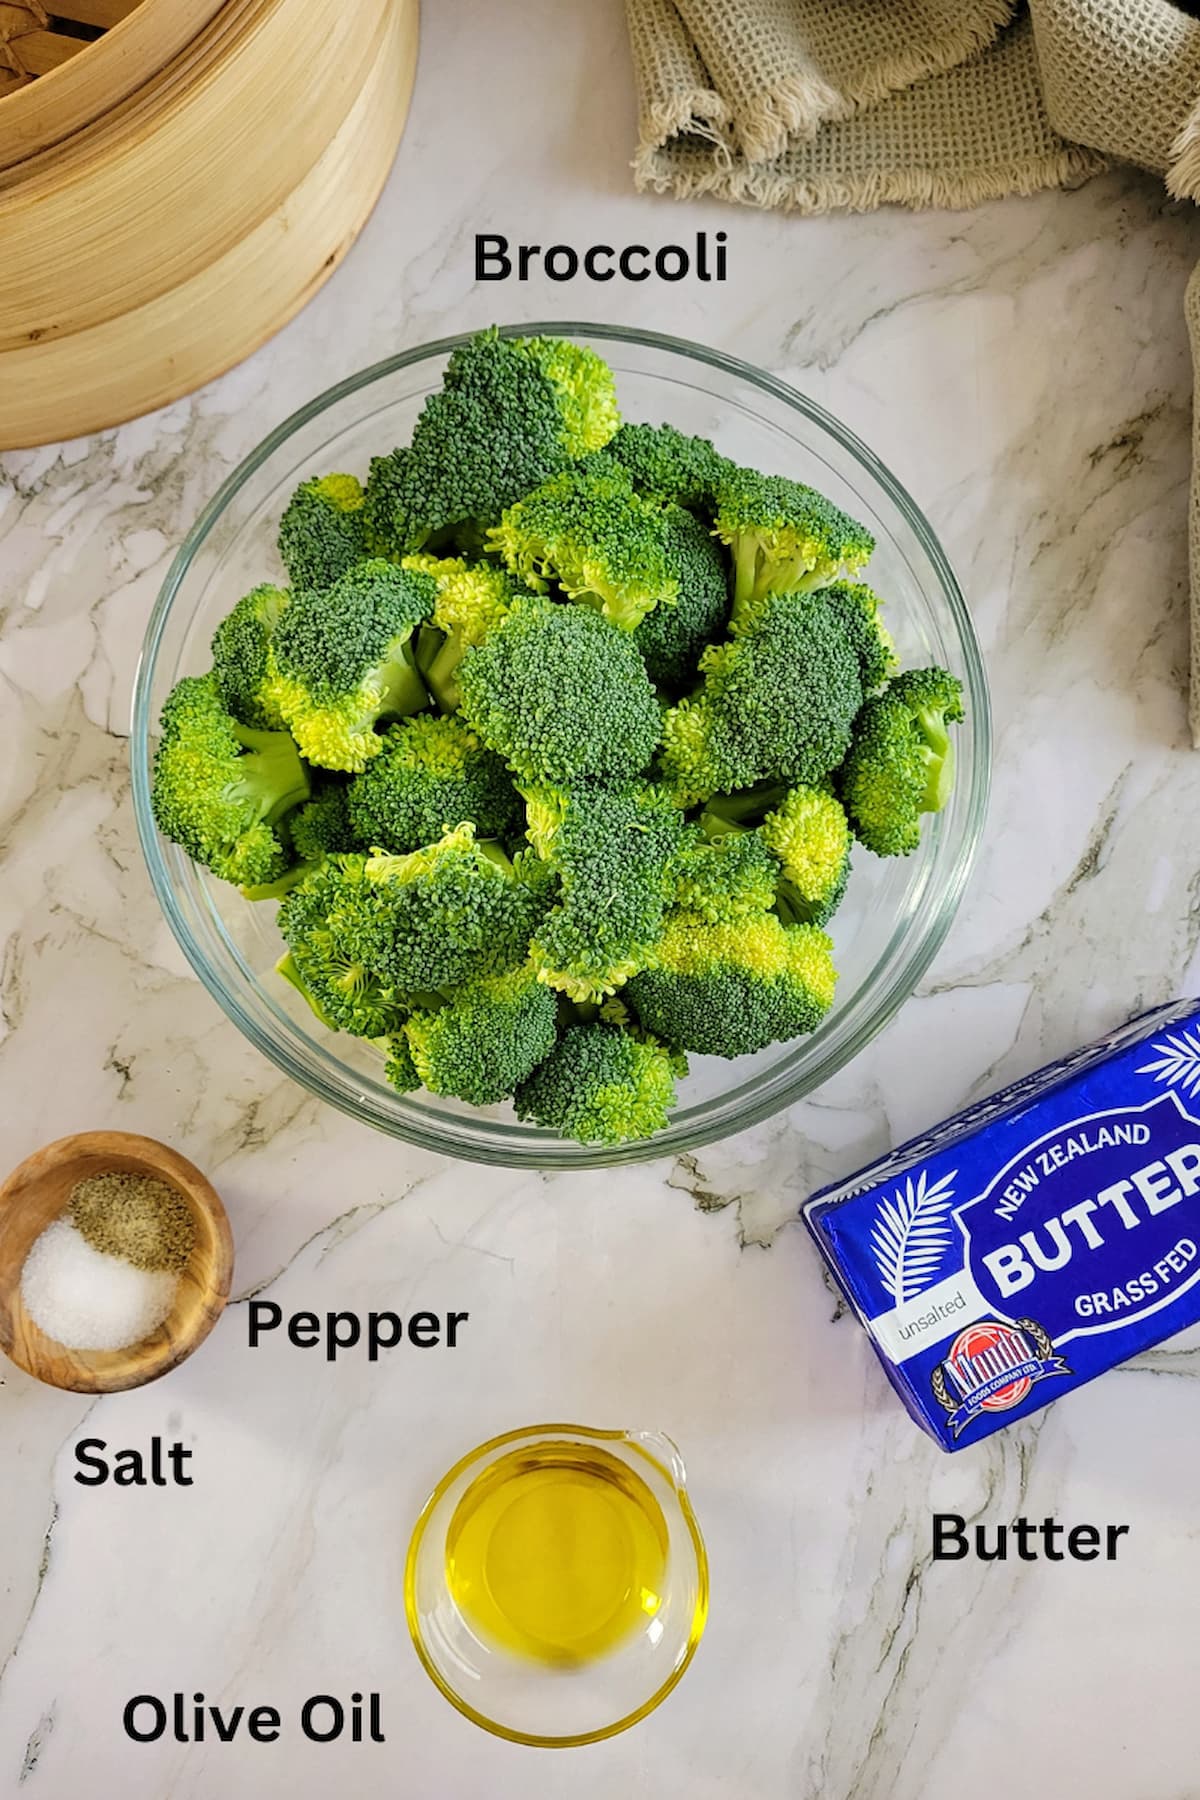 ingredients for steaming broccoli recipe - broccoli, butter, olive oil, salt, pepper